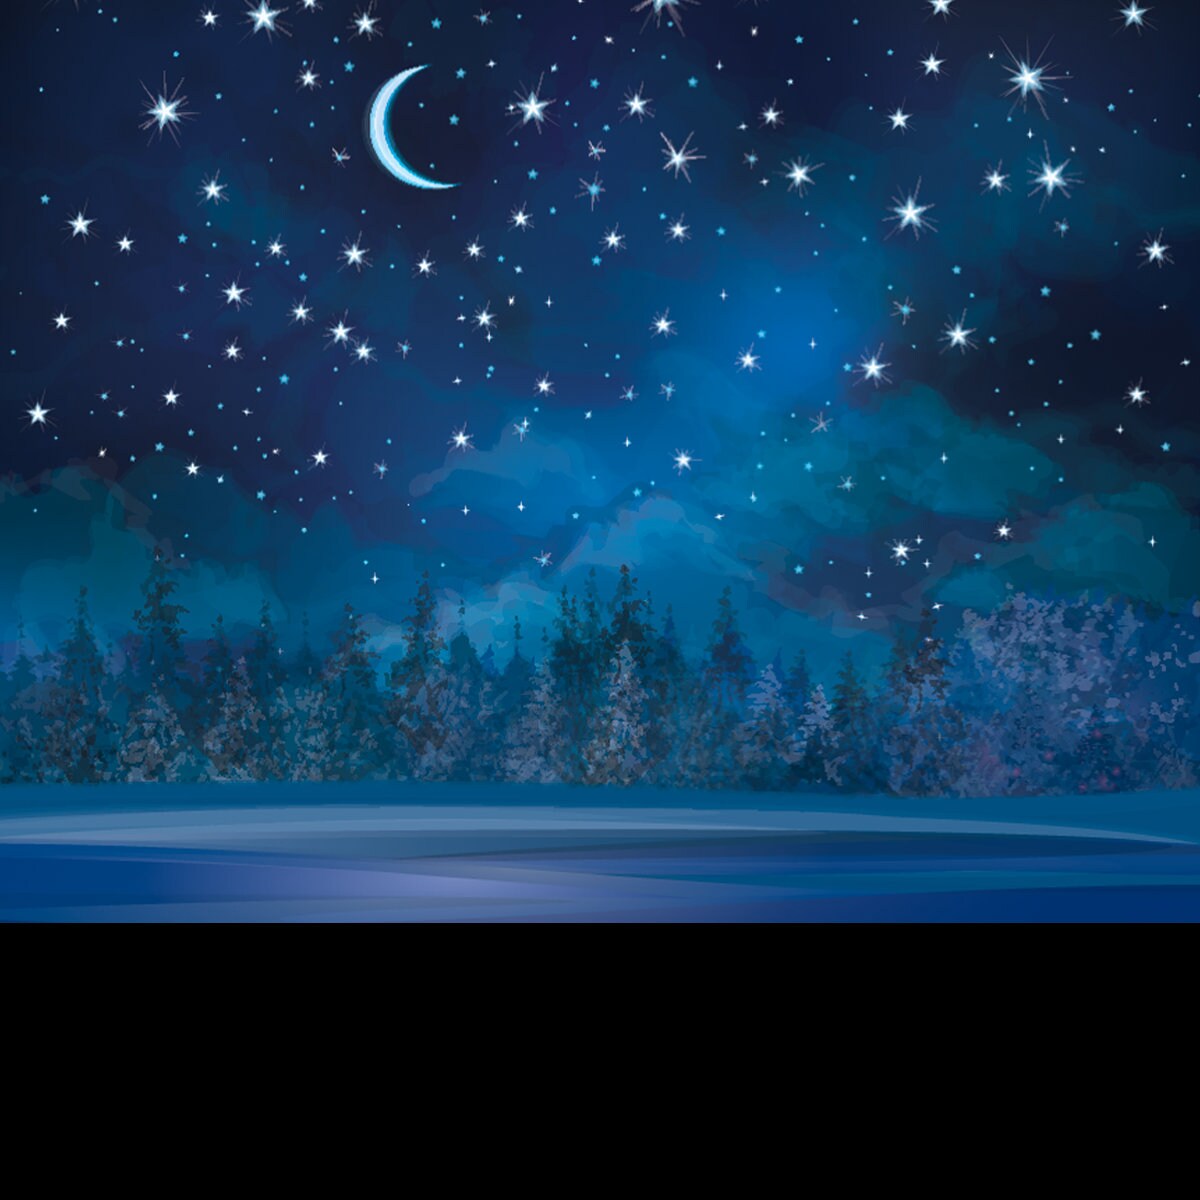 Night Winter Scene, Sky and Forest Background Wallpaper Boys Bedroom Mural